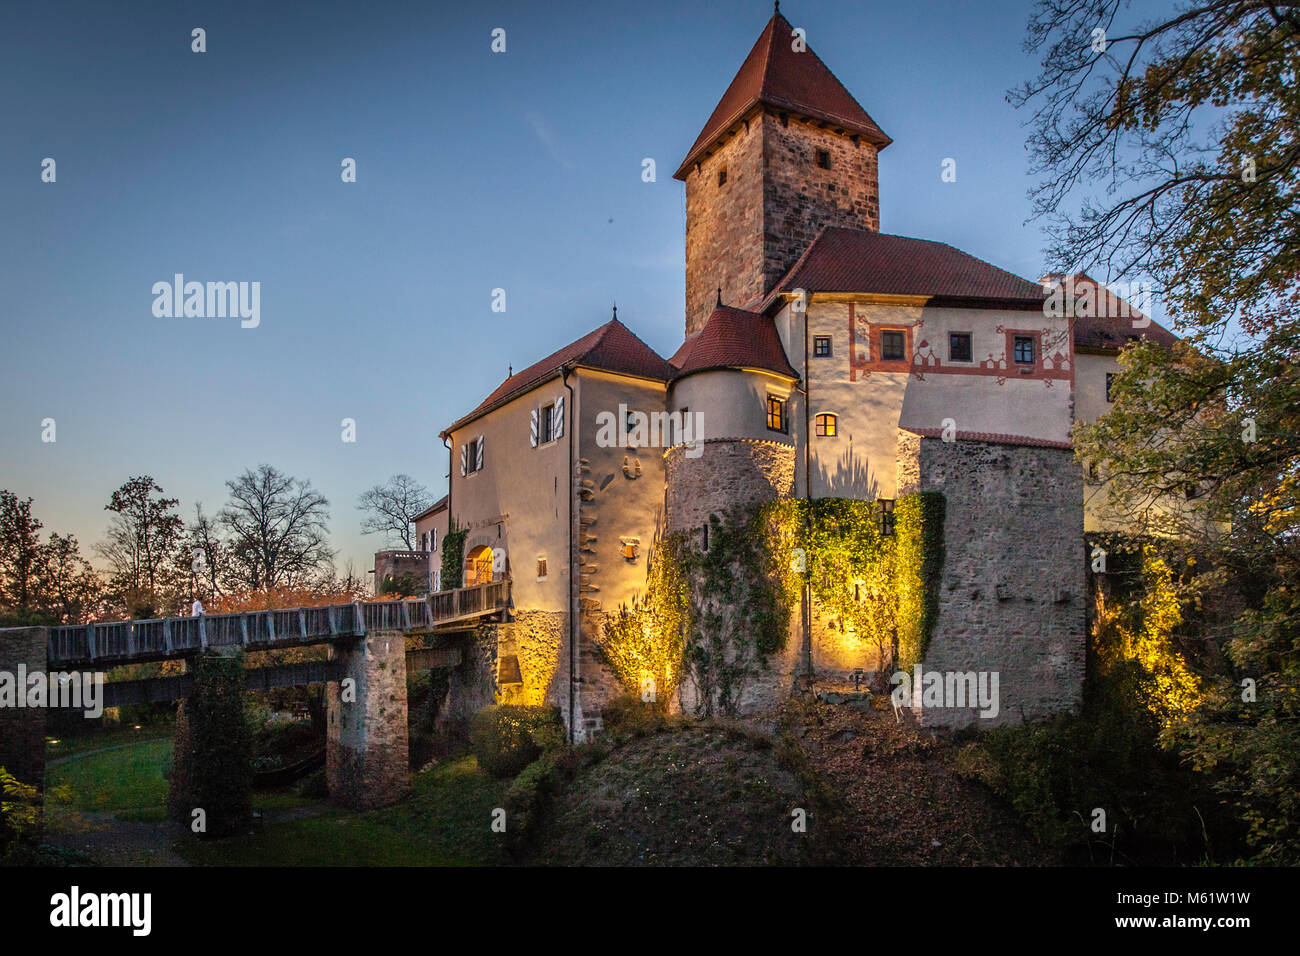 Relais & Chateaux Hotel Burg Wernberg - stile medievale e alta cucina art. Burg Wernberg castello tedesco in Baviera Foto Stock